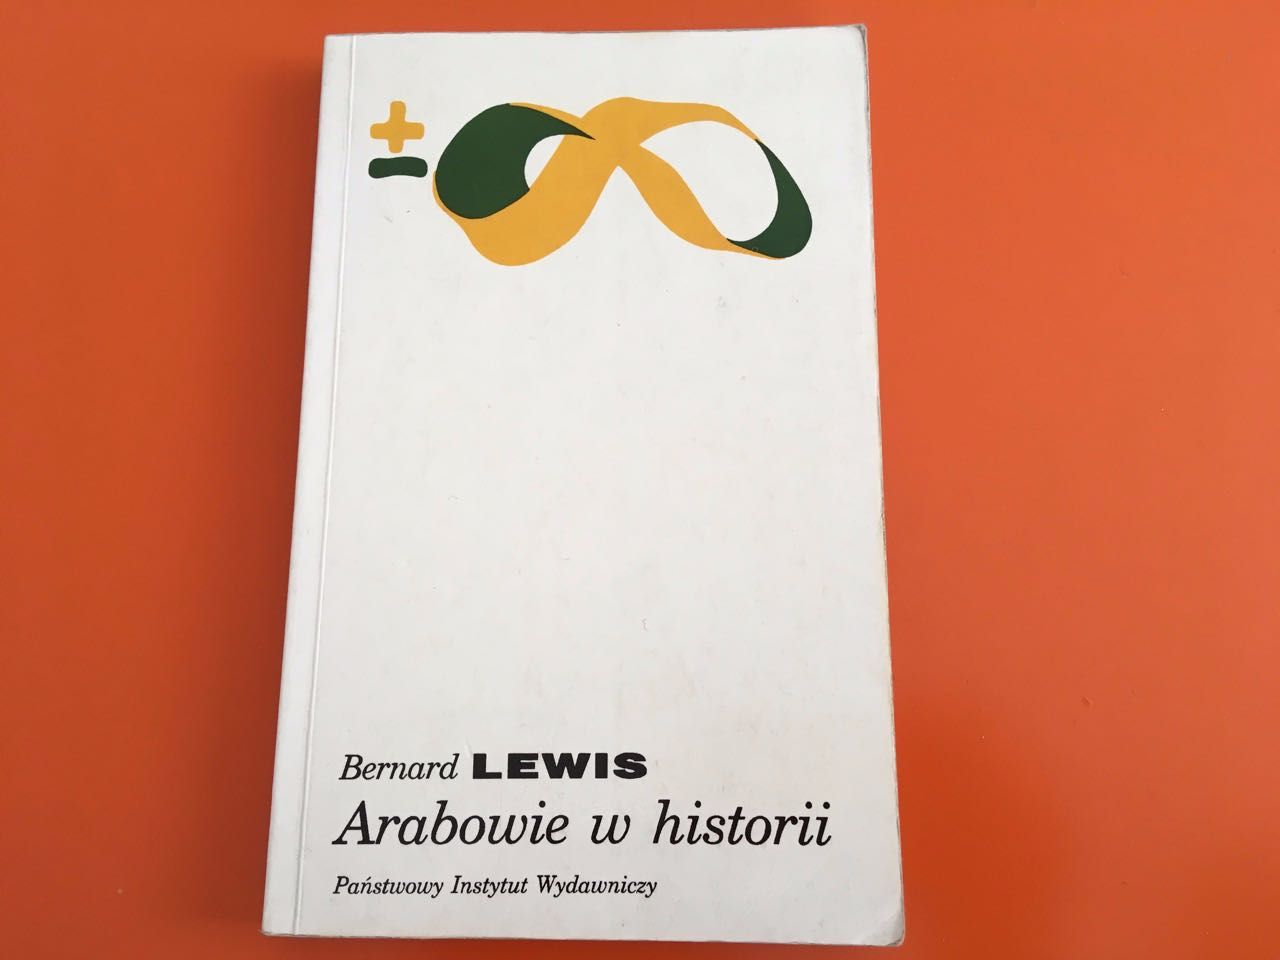 Bernard LEWIS Arabowie w historii